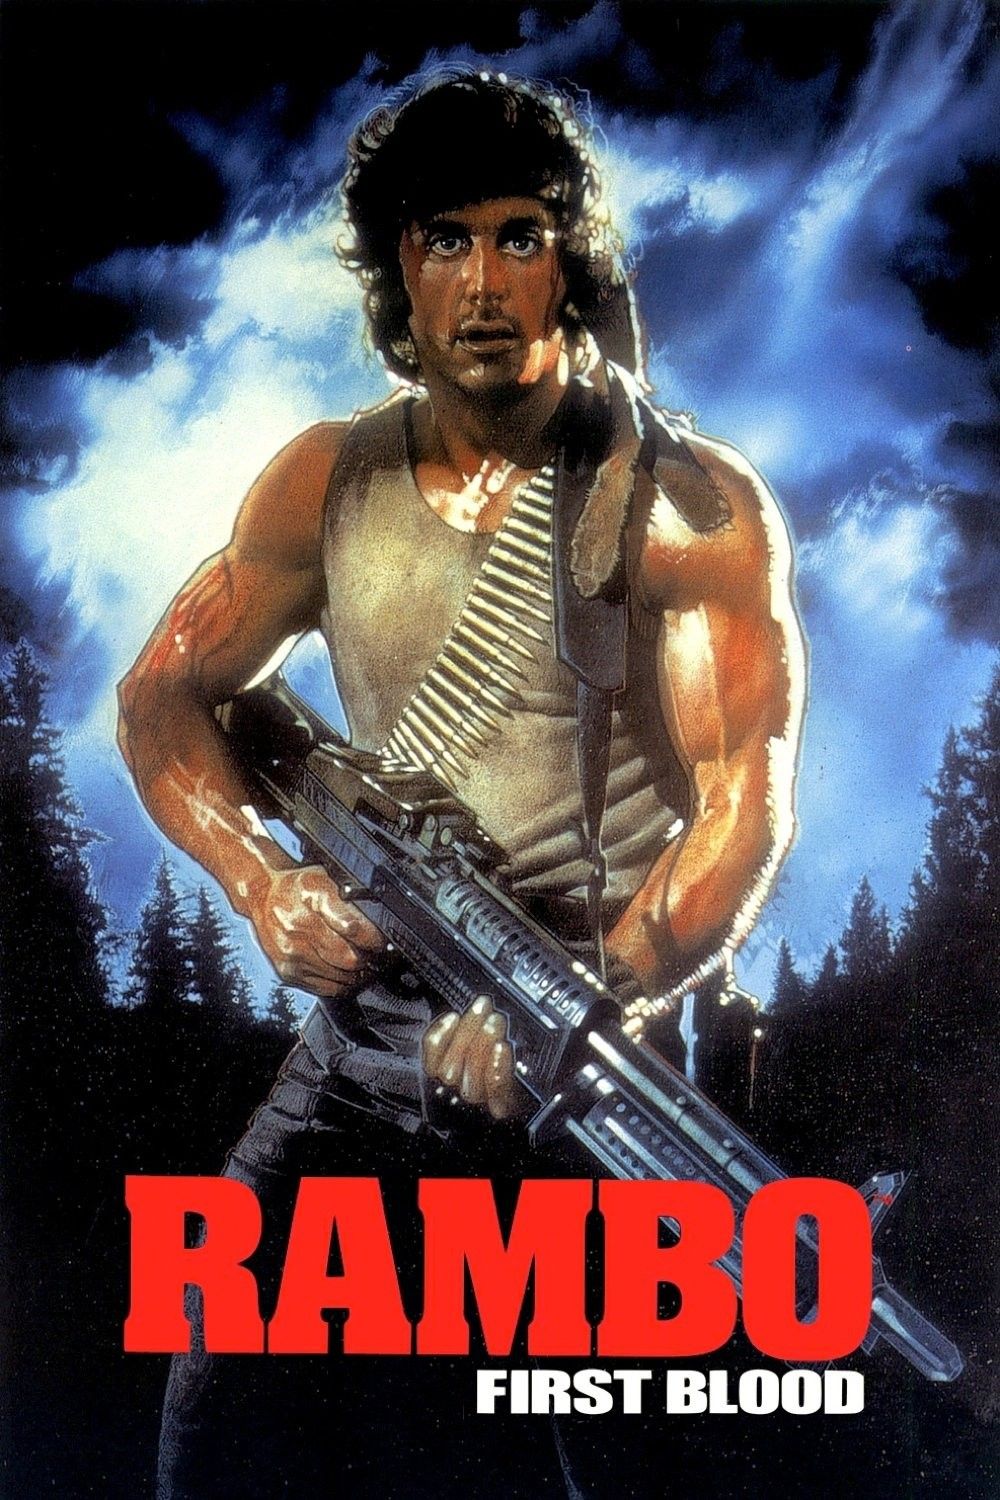 Rambo anecdotes film